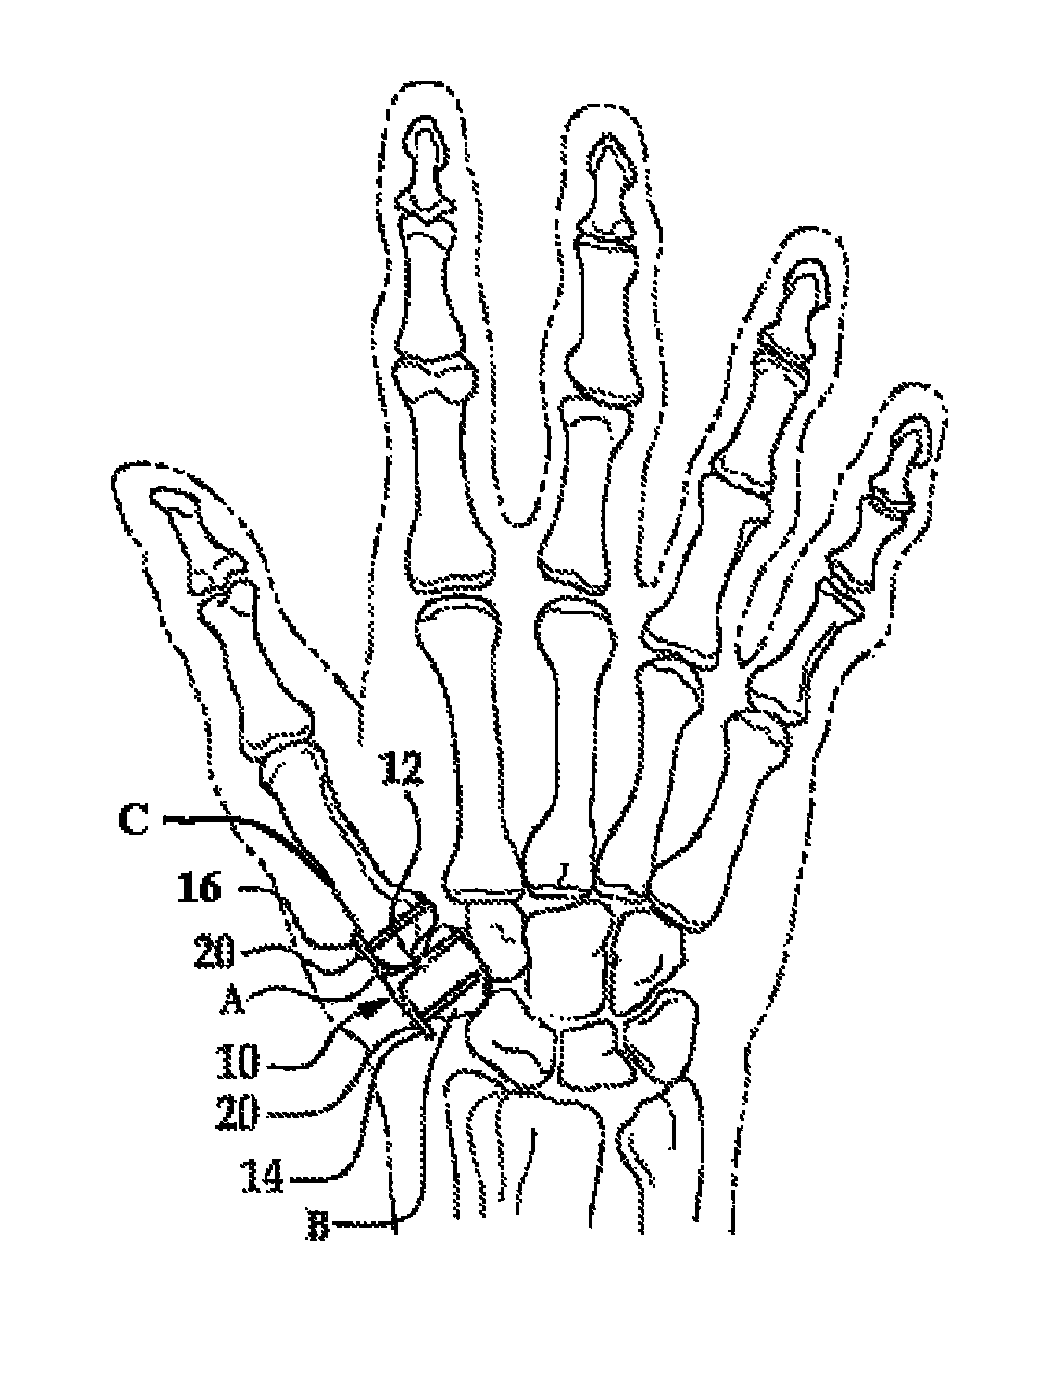 Surgical technique using a contoured allograft cartilage as a spacer of the carpo-metacarpal joint of the thumb or tarso-metatarsal joint of the toe